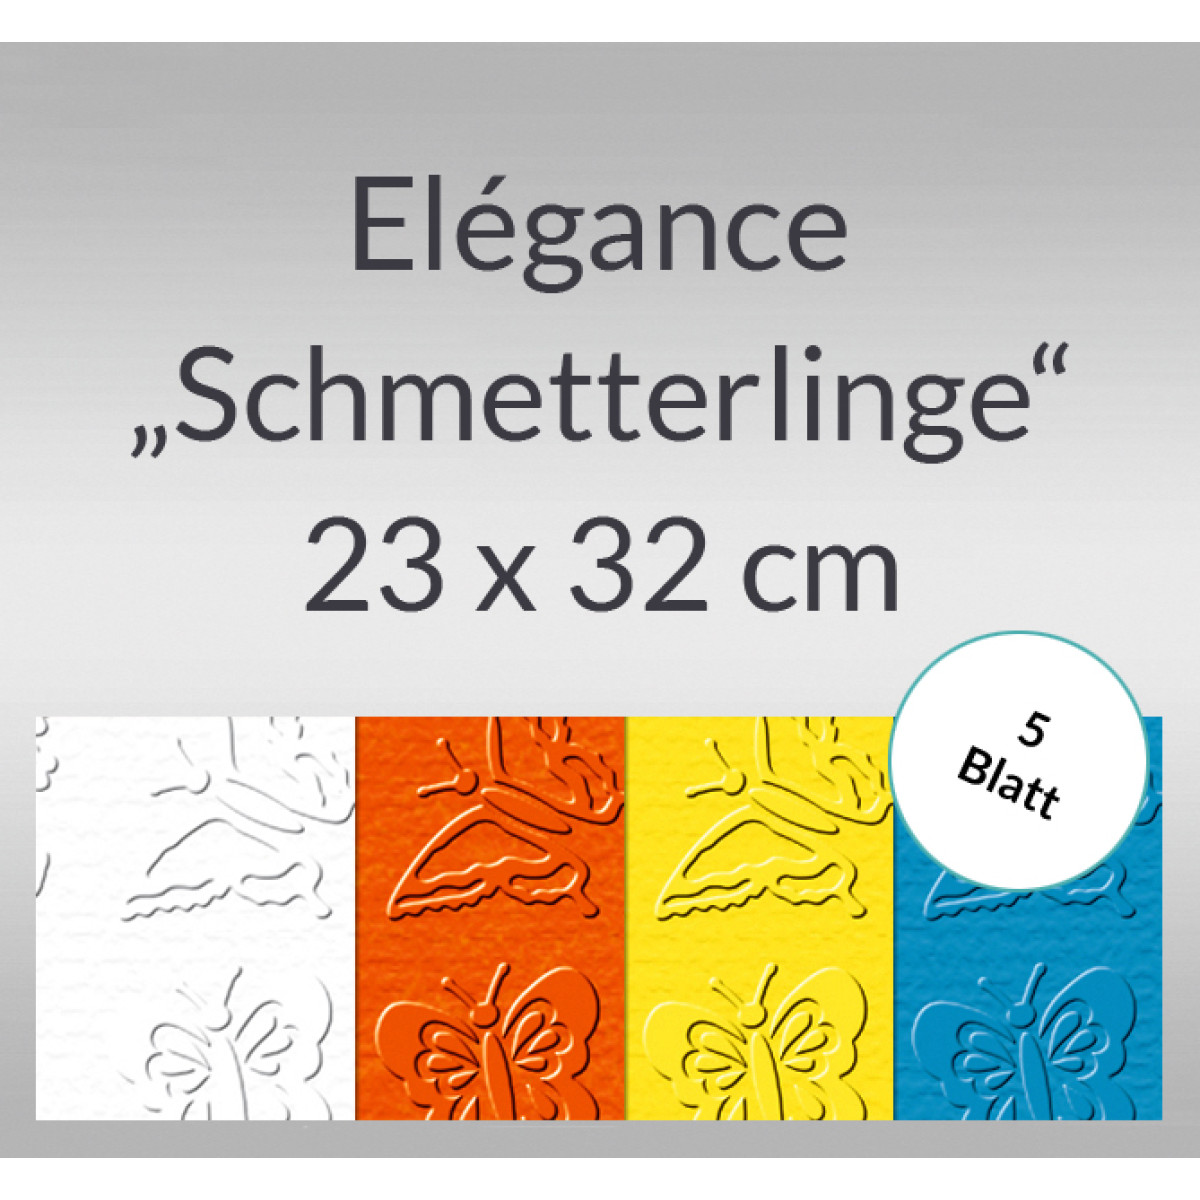 Elegance "Schmetterlinge" 220 g/qm 23 x 32 cm - 5 Blatt